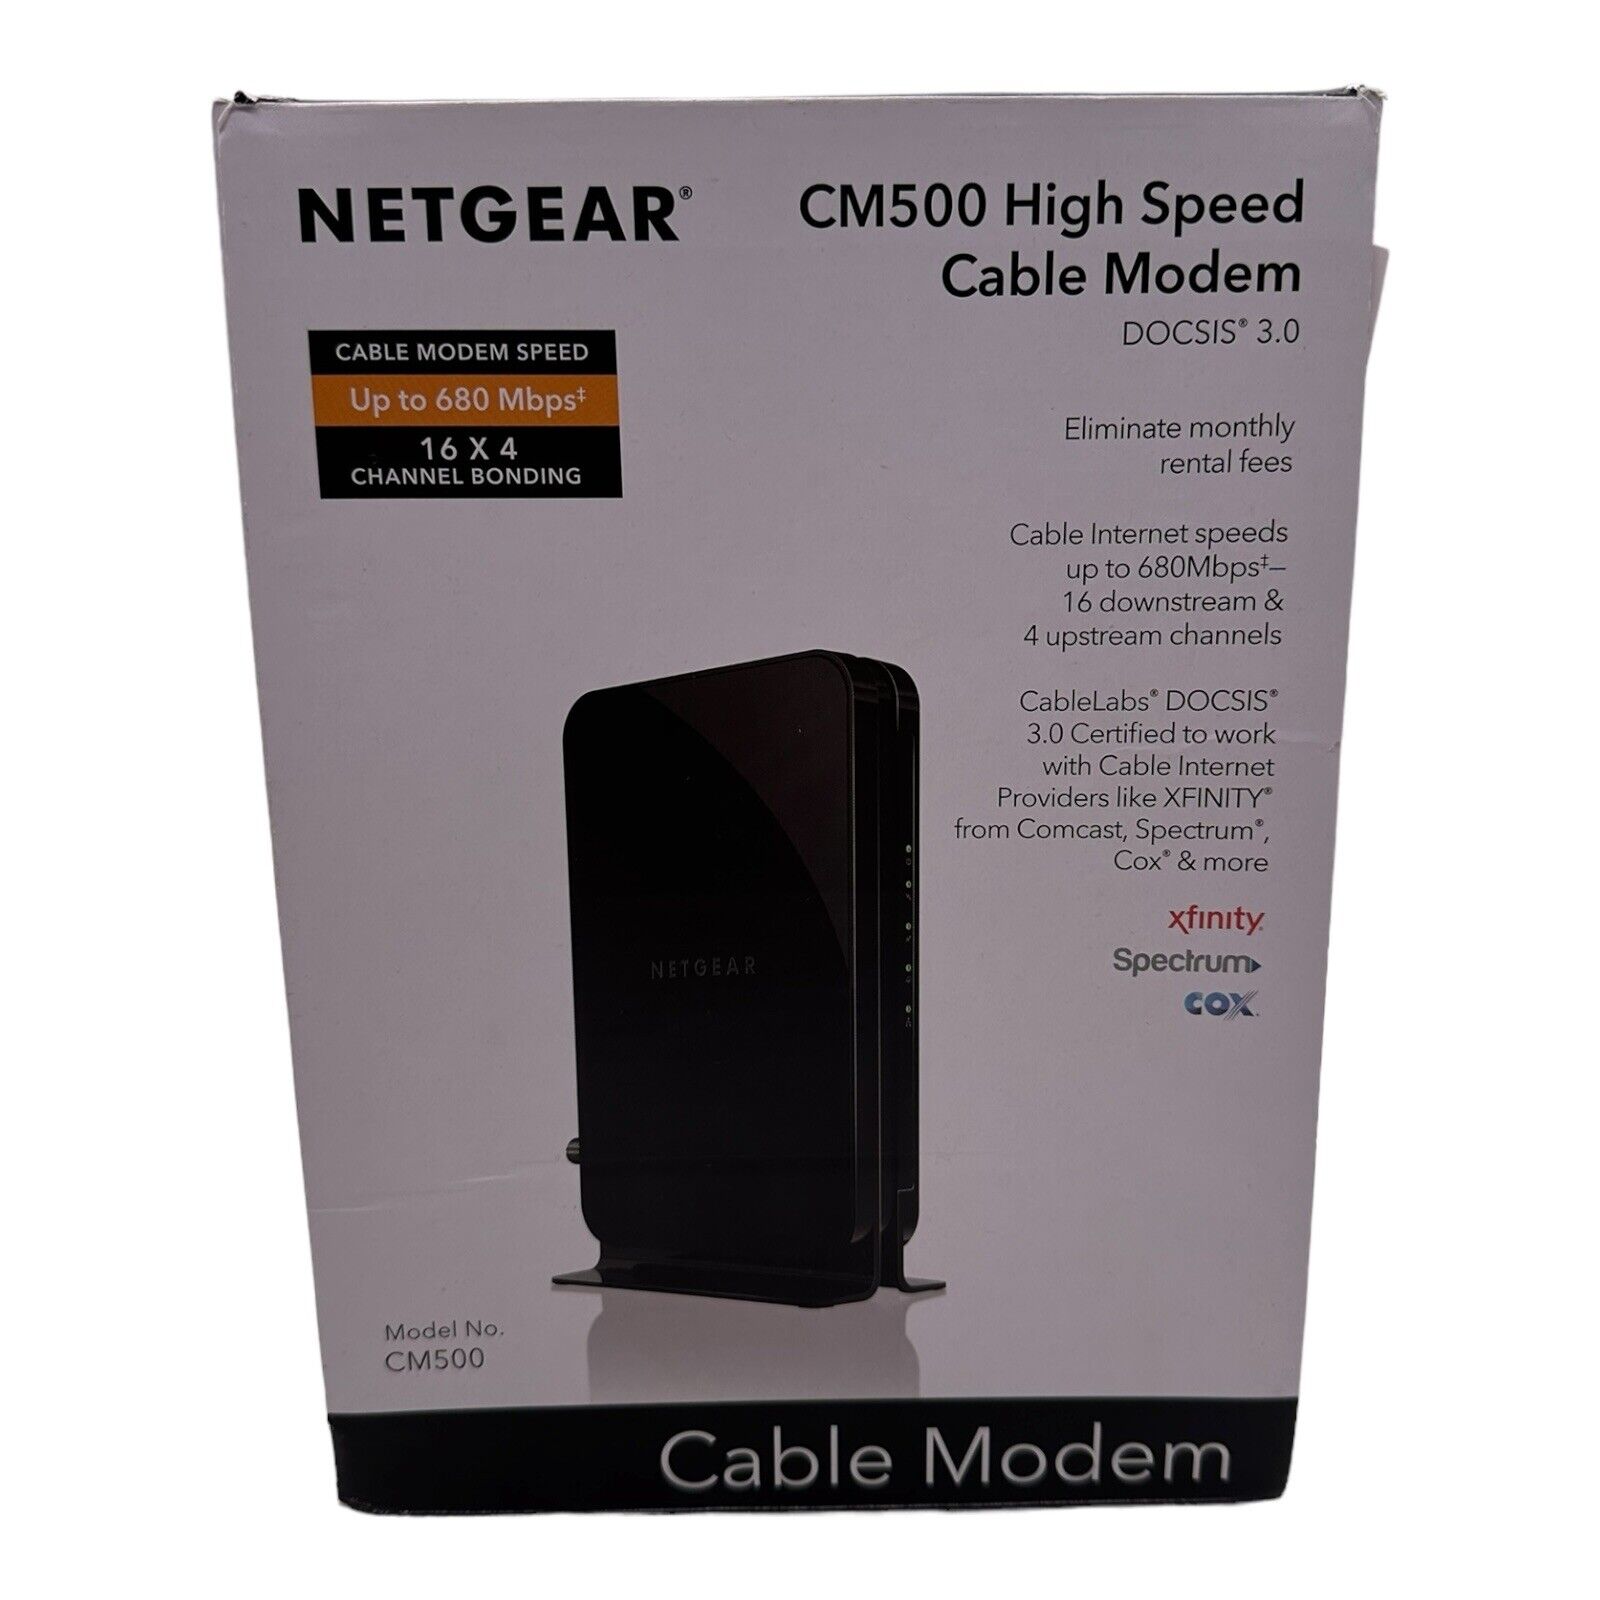 NETGEAR CM500 High Speed Cable Modem | DOCSIS 3.0 | CM500-100NAS - New Open Box